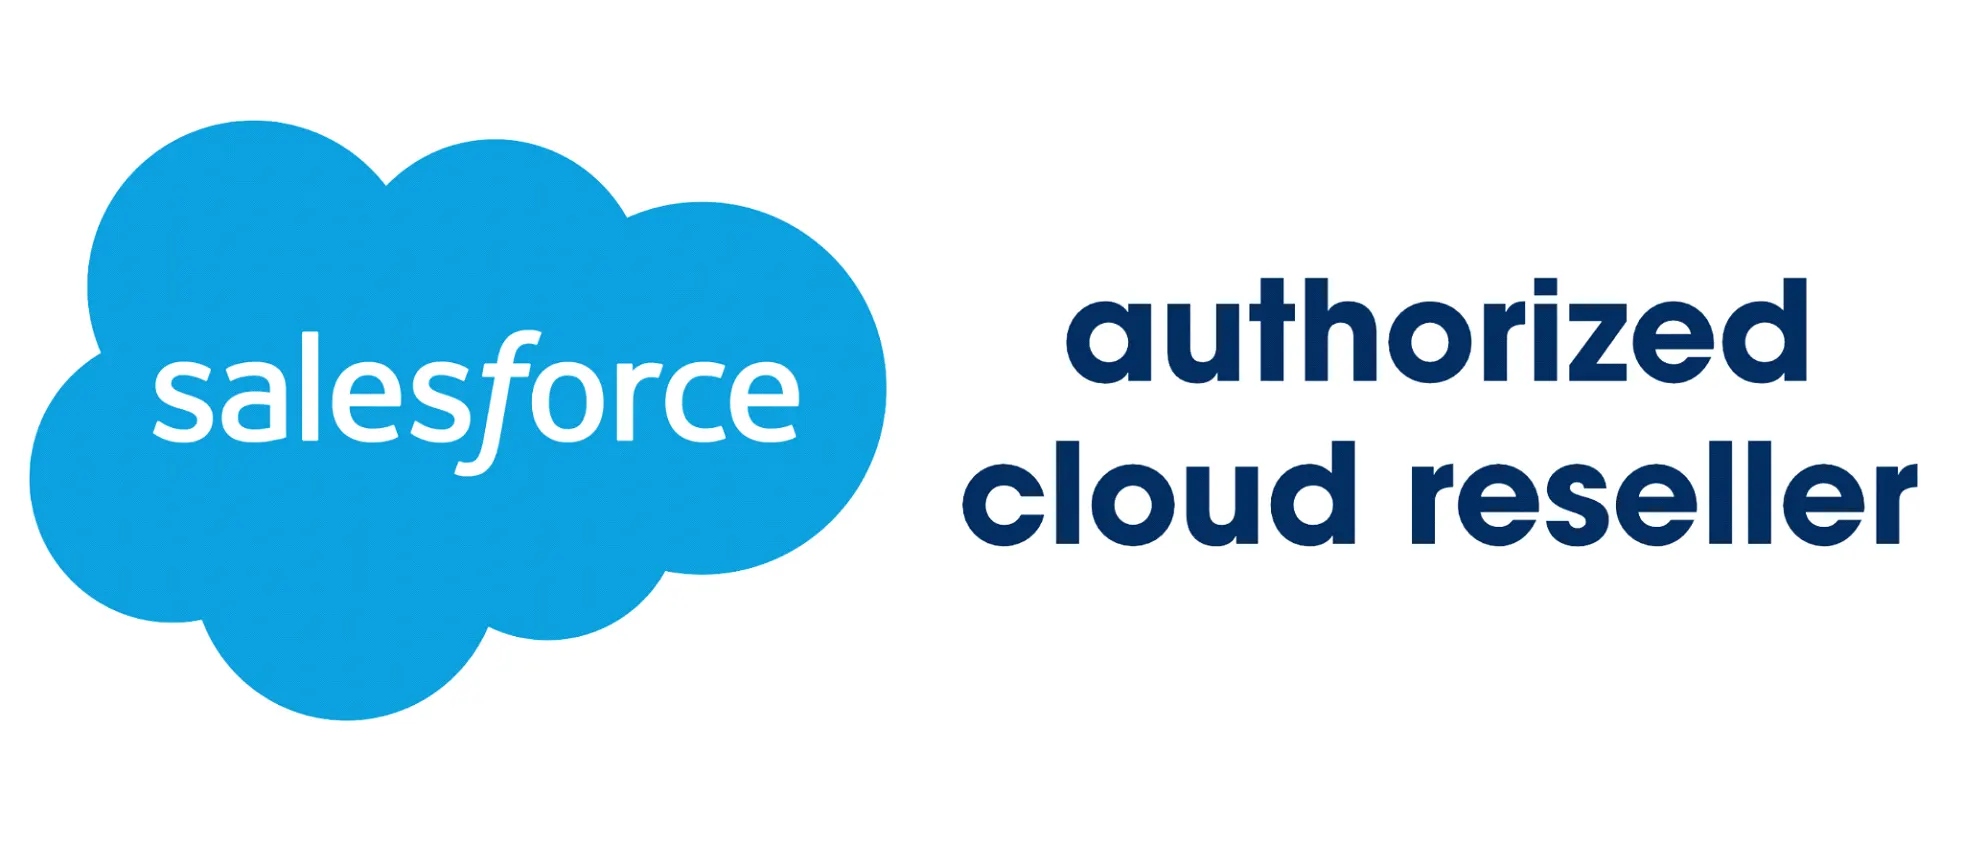 Salesforce Authorized Cloud Reseller Logo